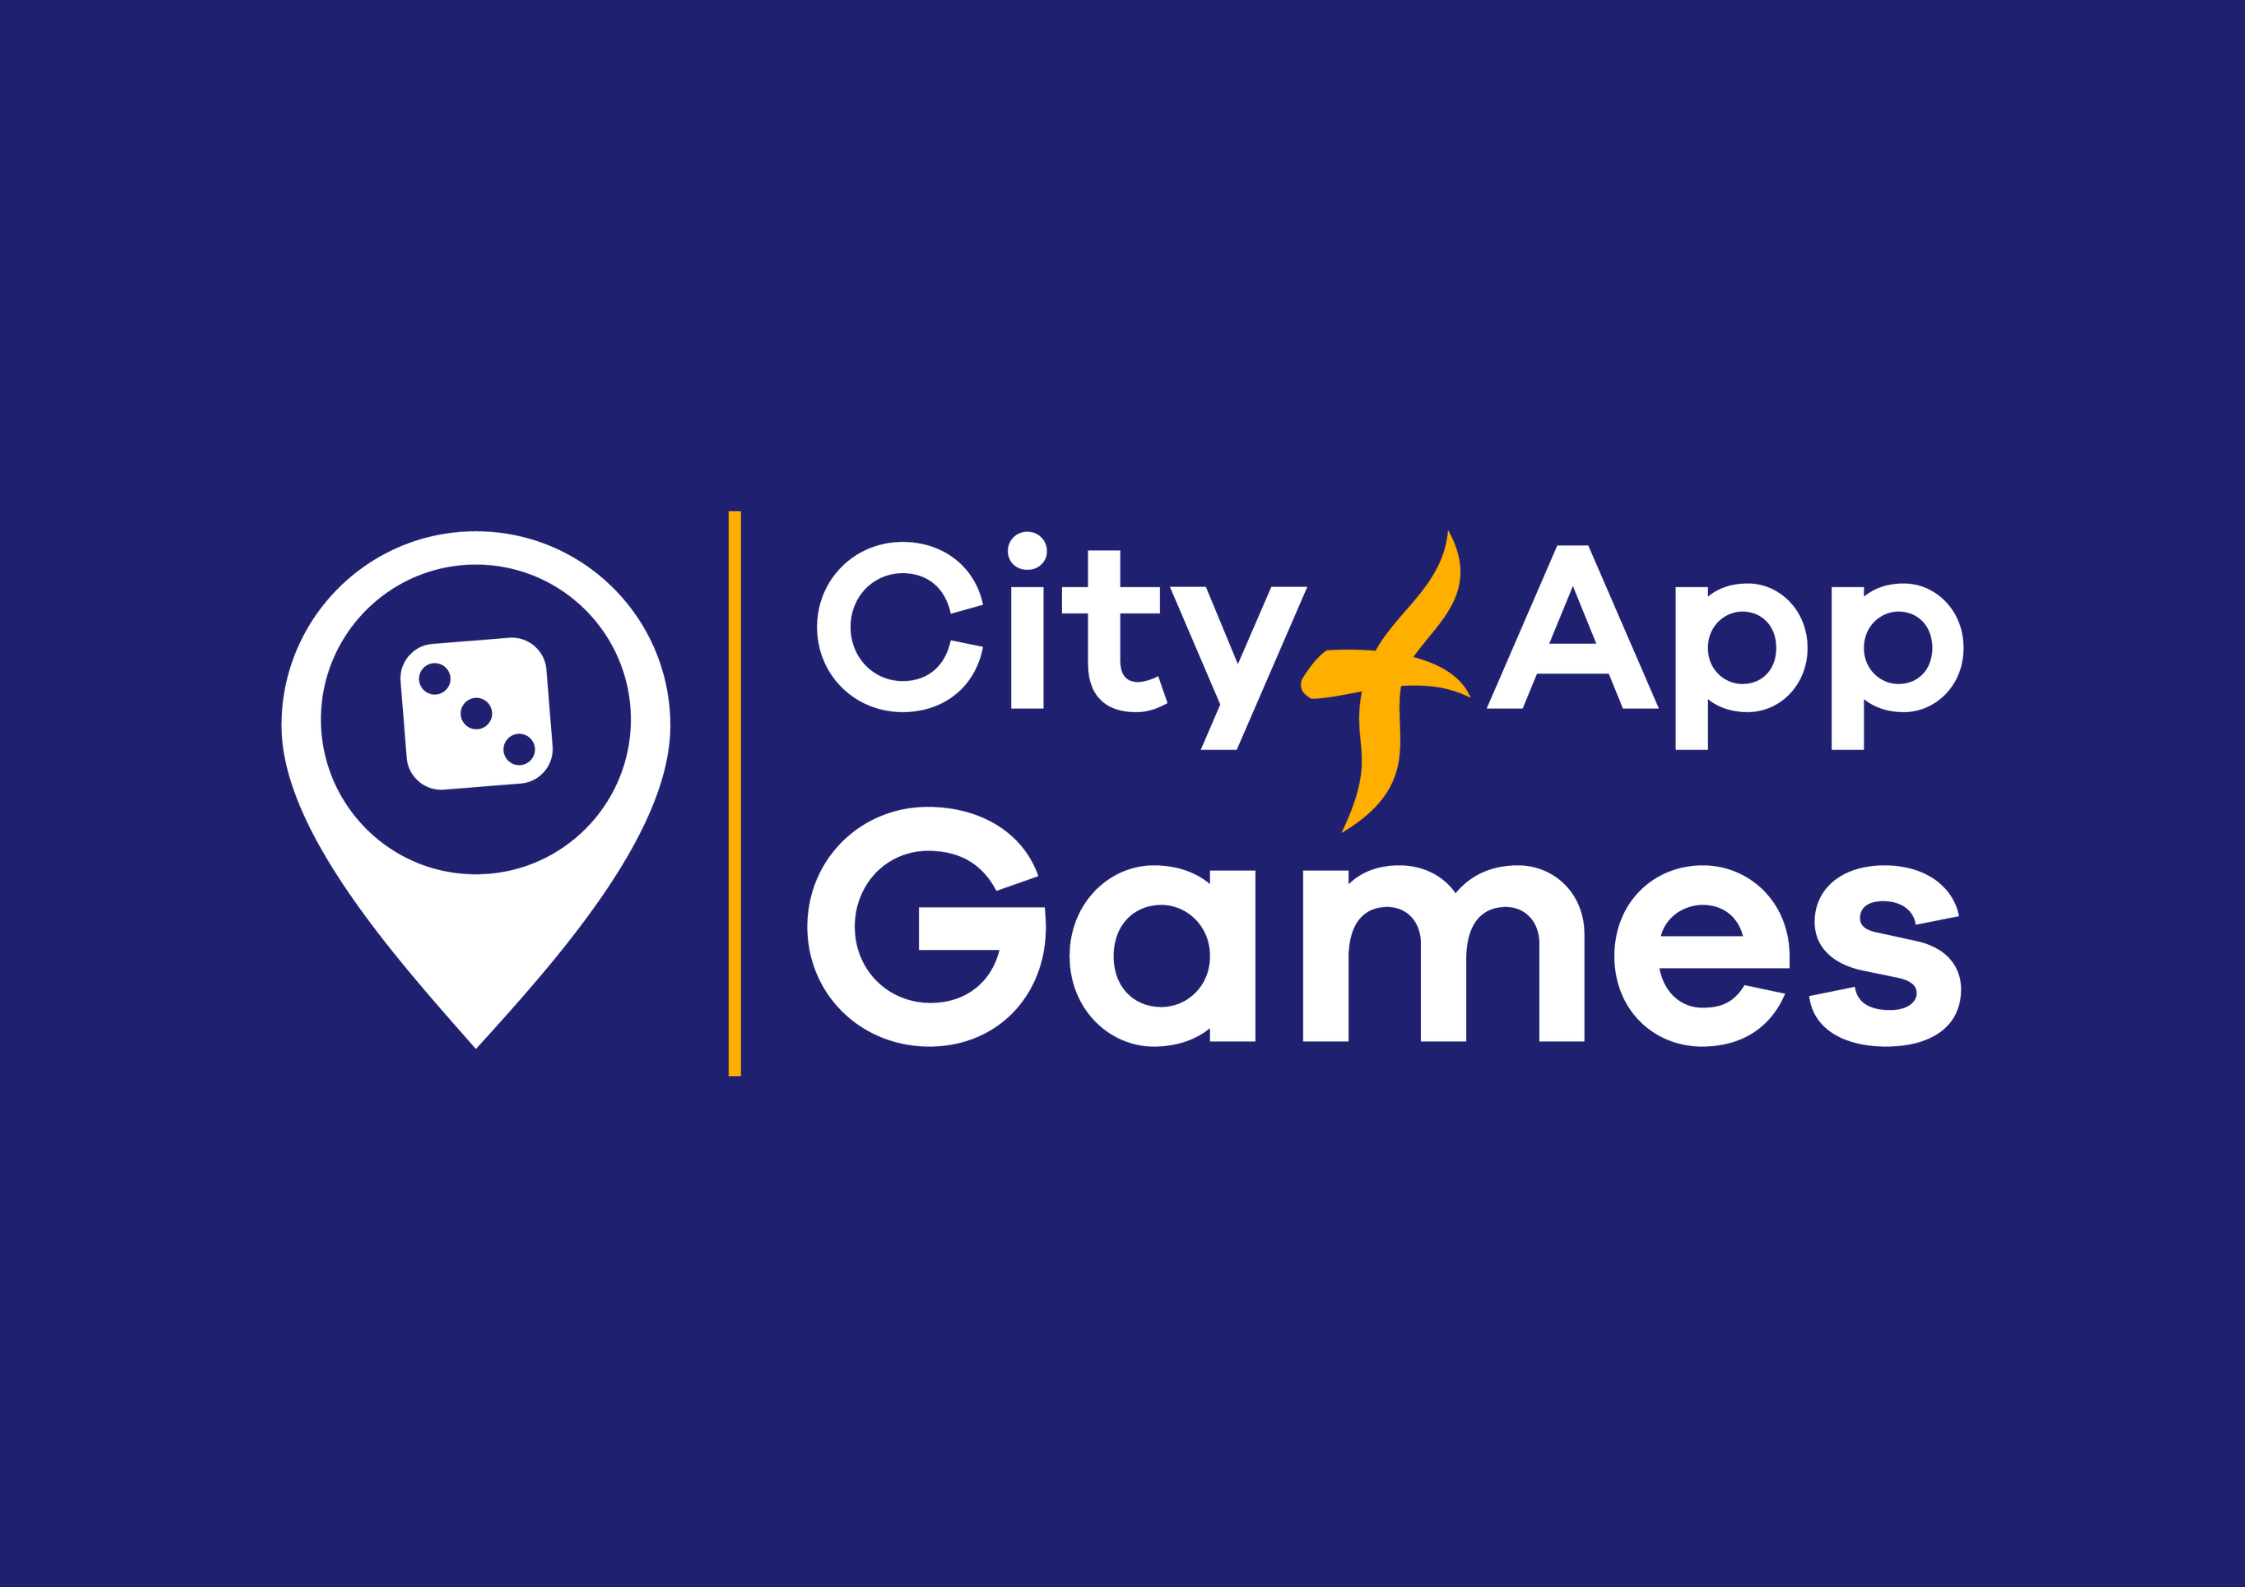 City App Games